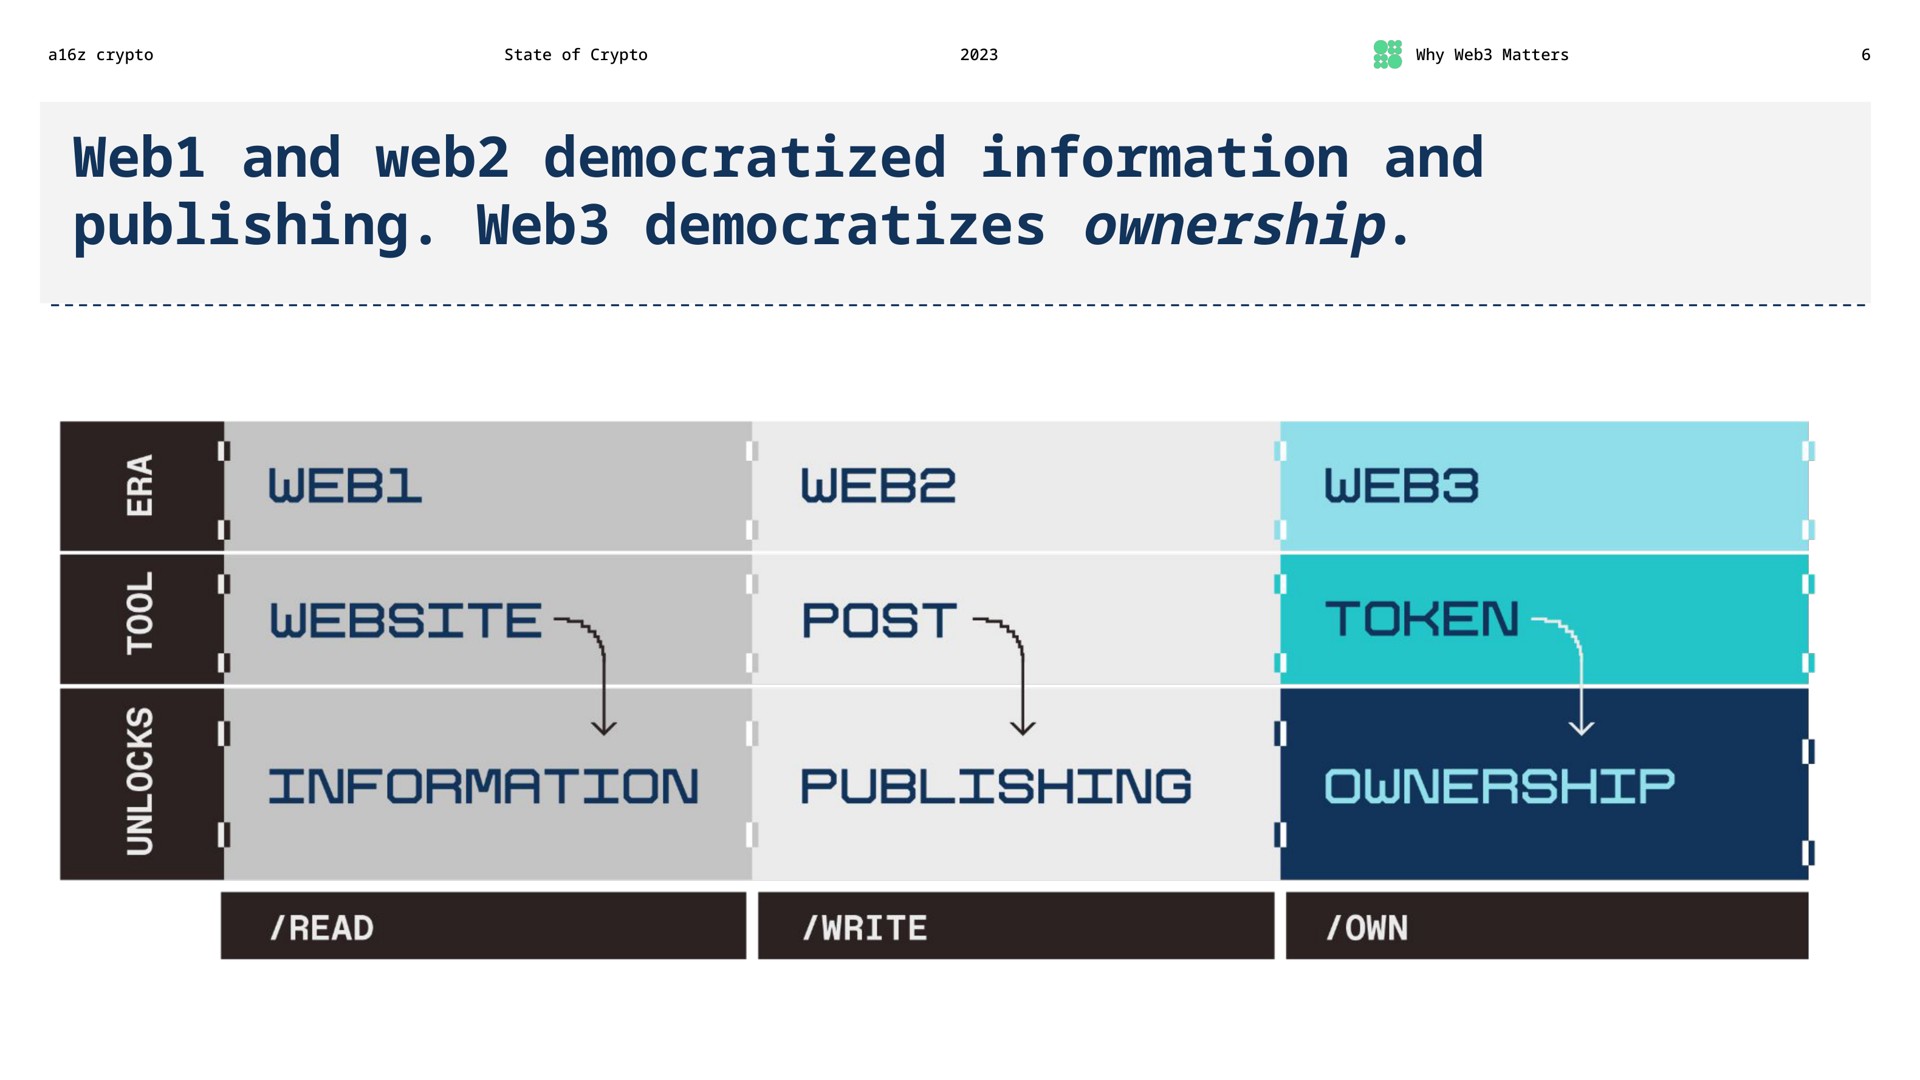 web and web democratized information and publishing web democratizes ownership webs i token | a16z